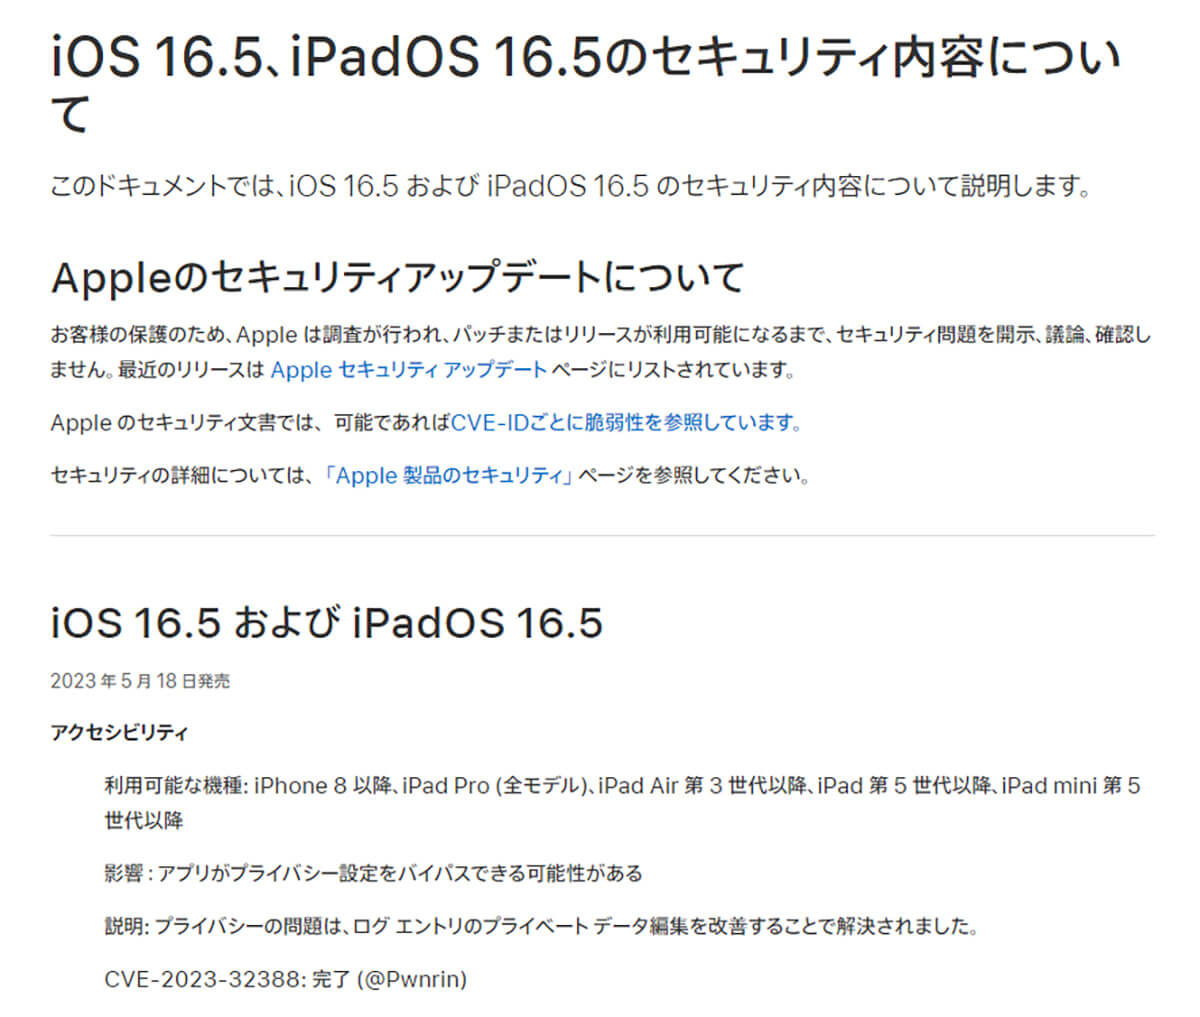 iOS16.5のセキュリティアップデートの詳細な内容